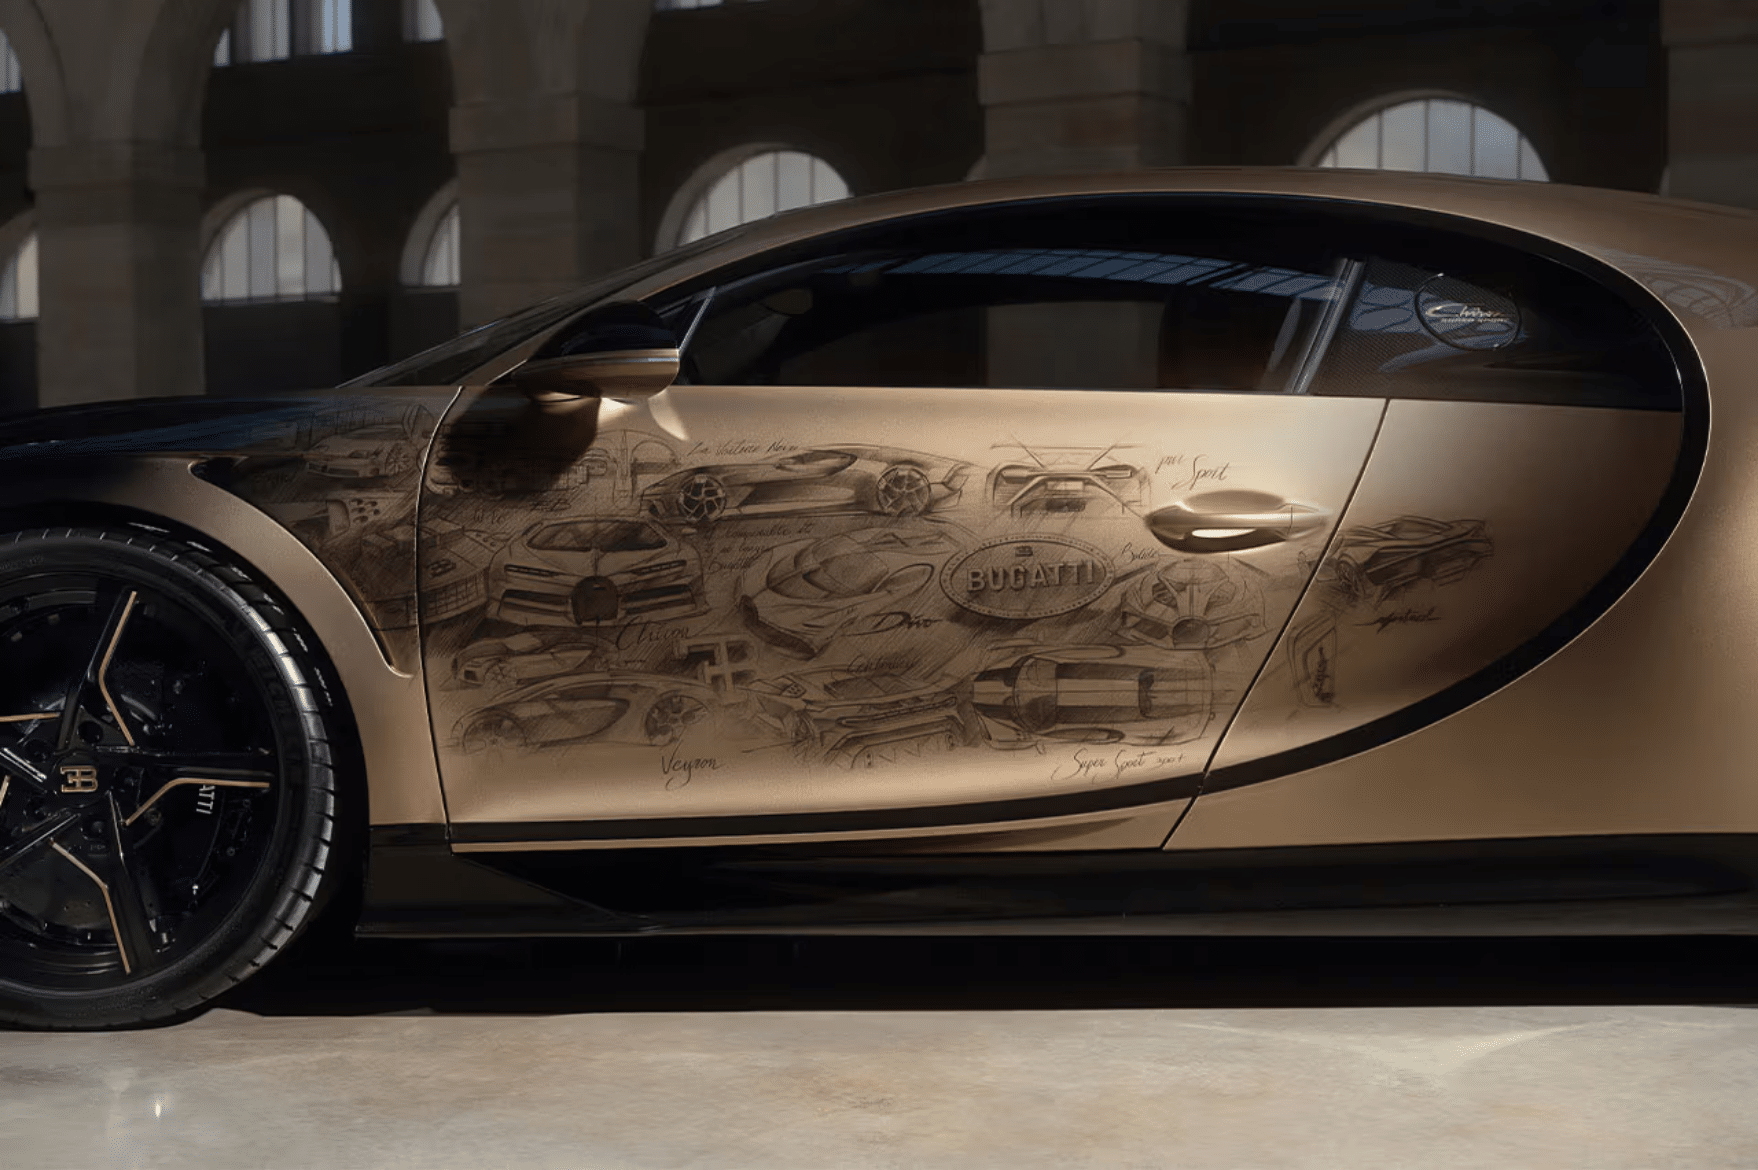 Bugatti Chiron Super Sport 'Golden Era'